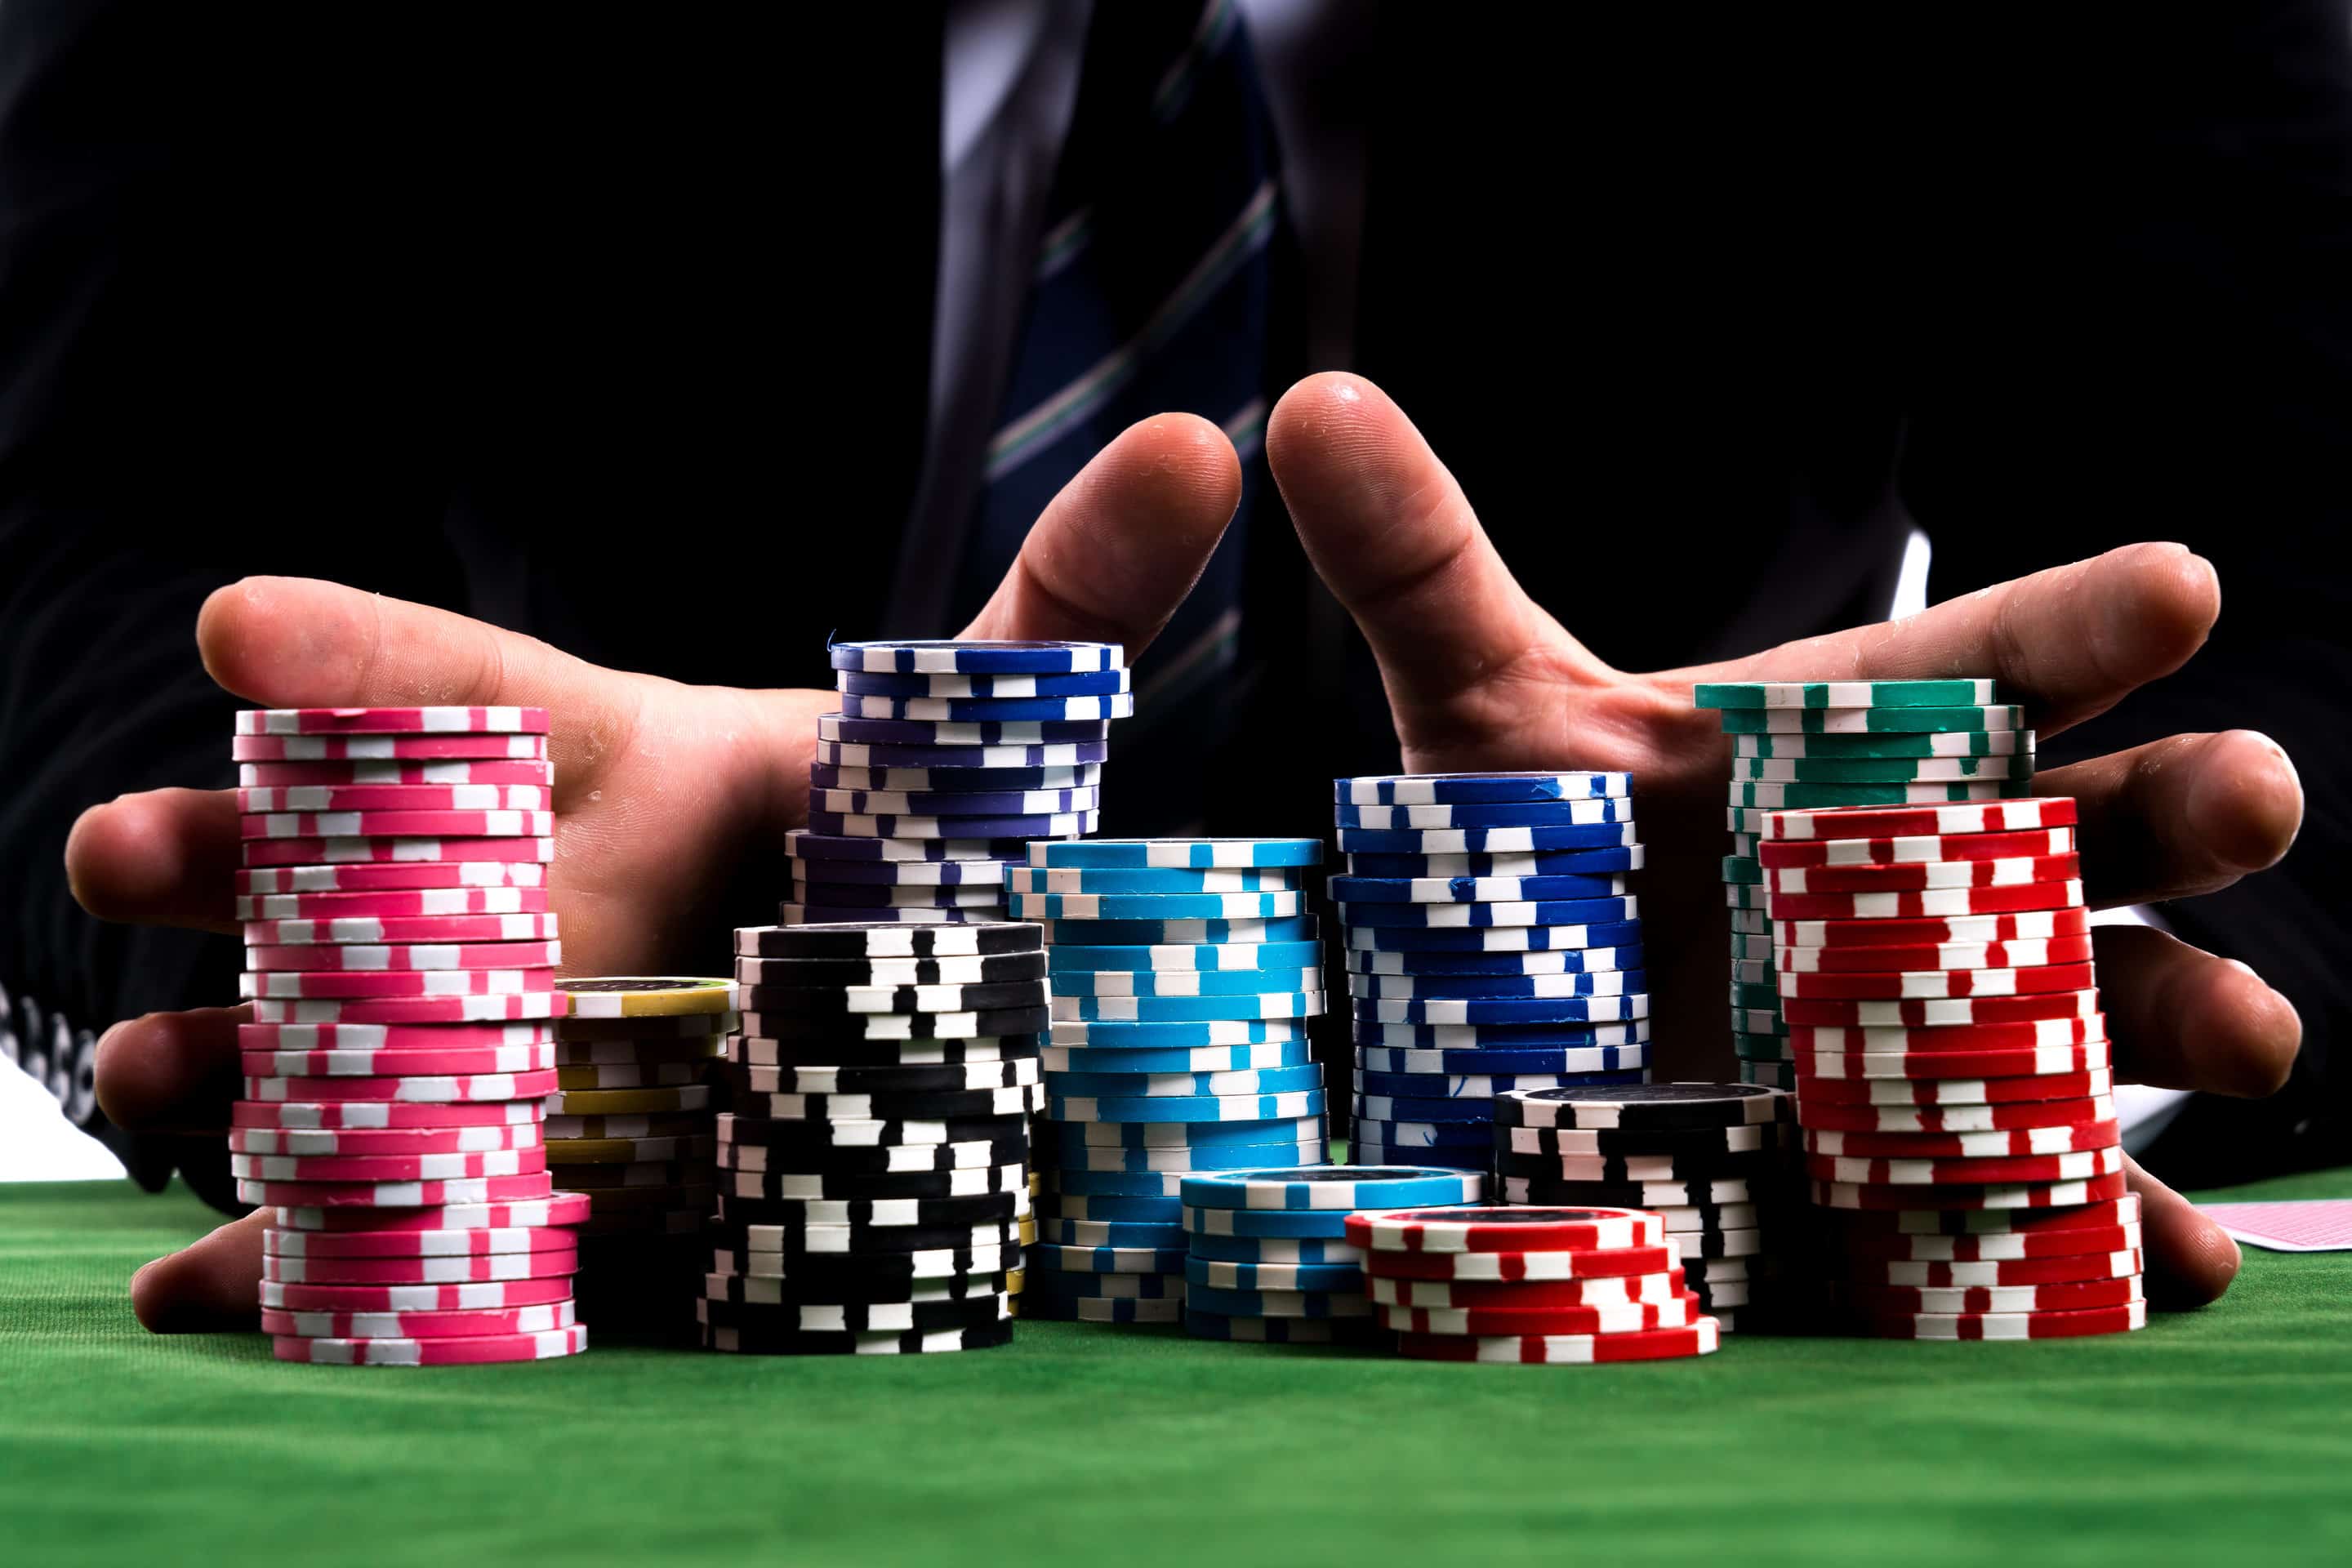 Su dung HUD sai cach trong game Poker se la mot sai lam lon - Hinh 1